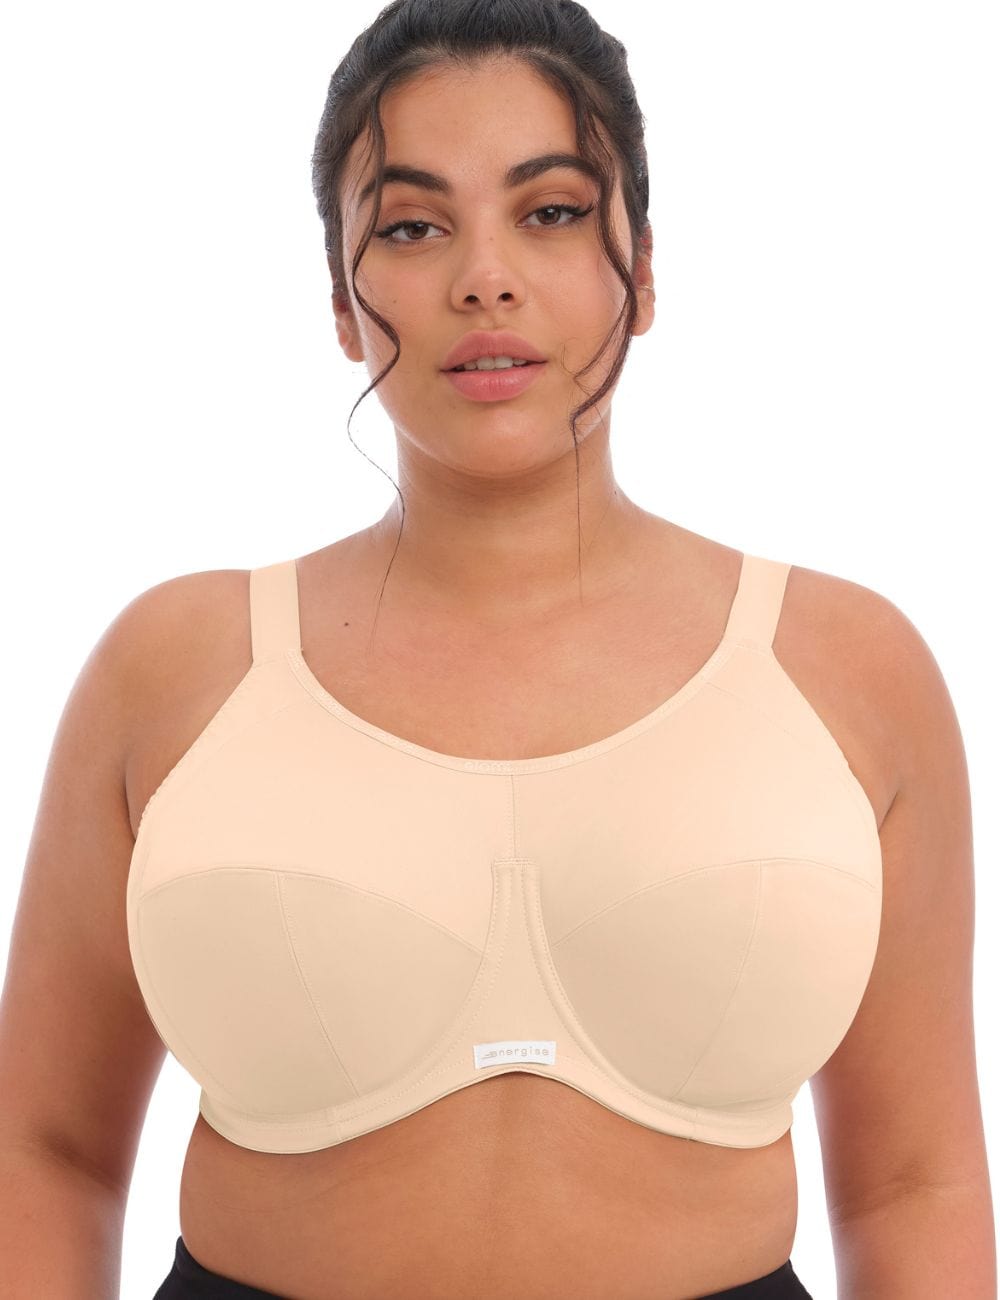 Big Tits in a small sports bra : r/EmSeAUS